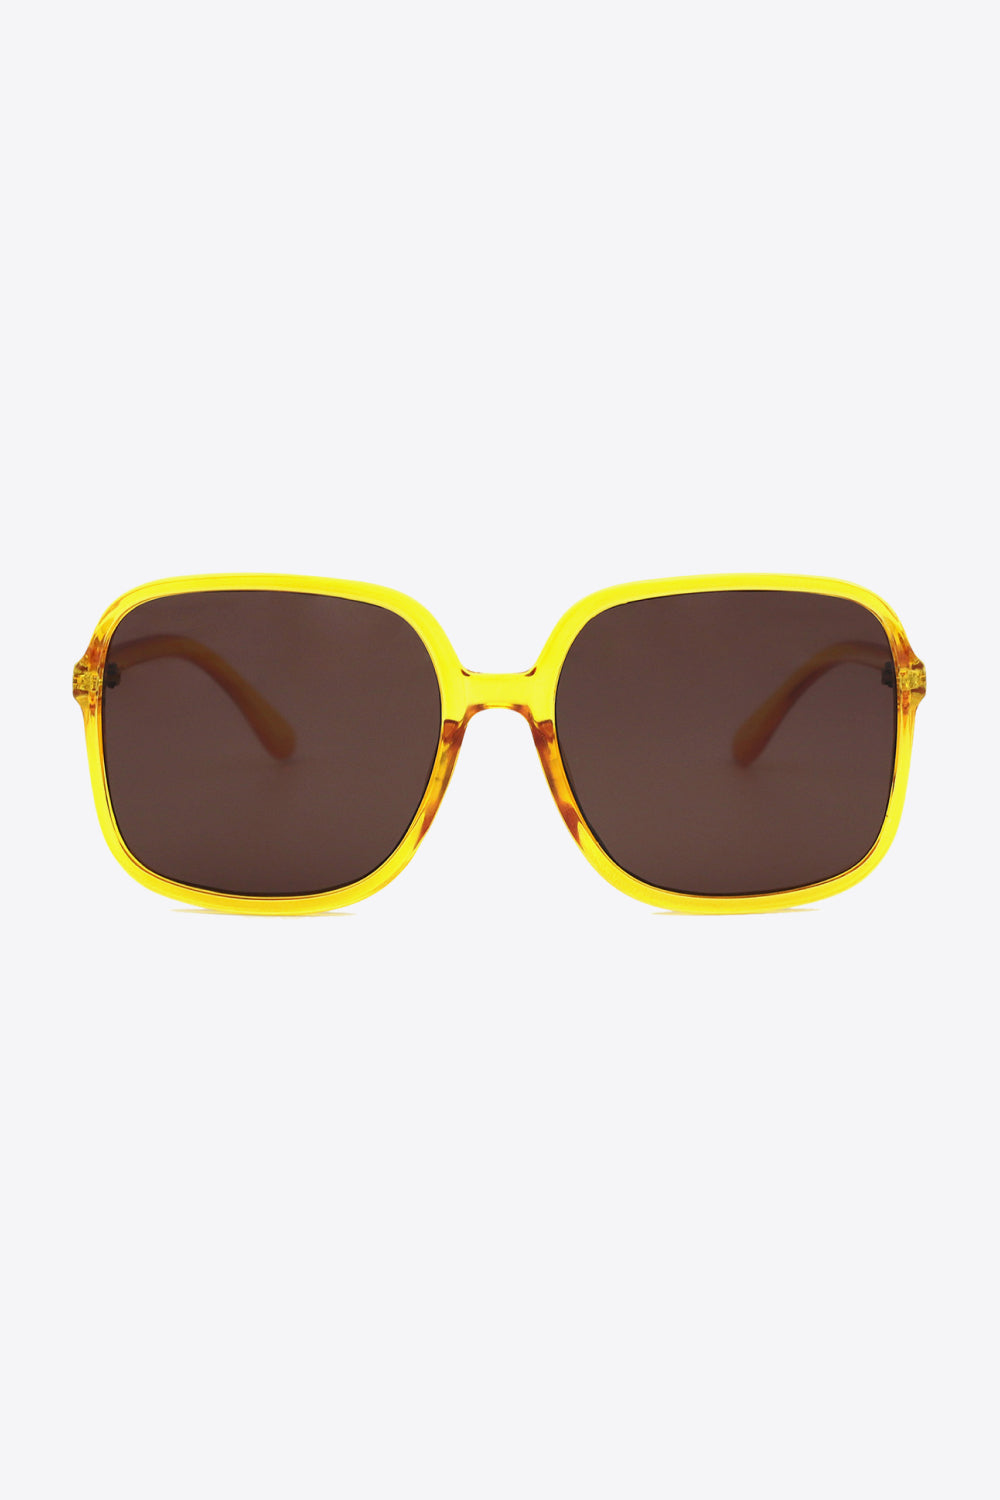 Dark Olive Green Polycarbonate Square Sunglasses Sunglasses